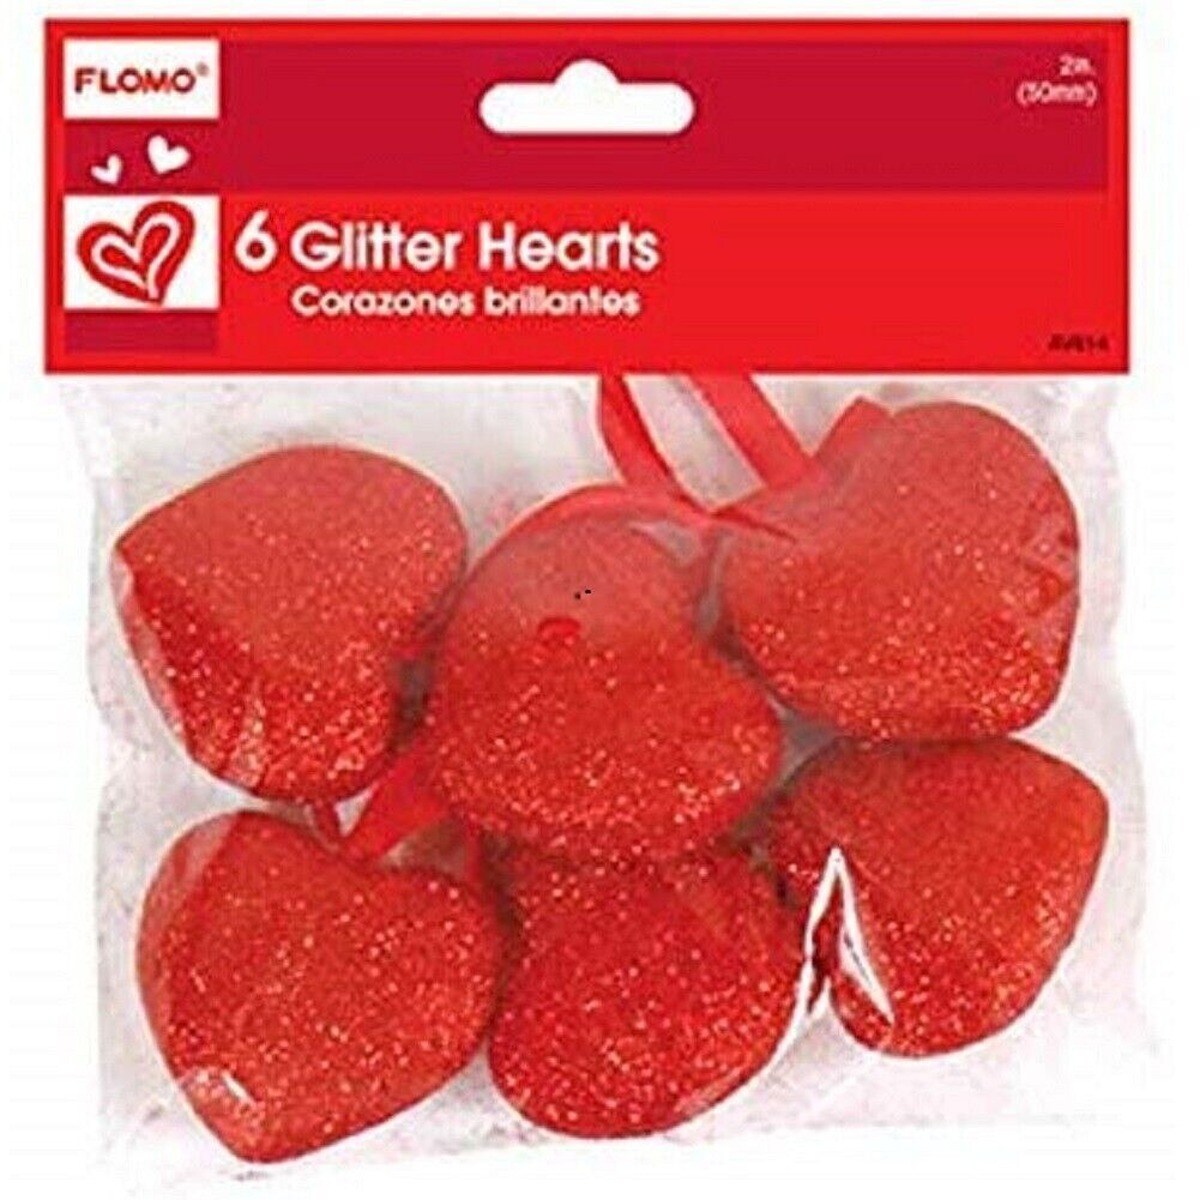 100 PC Bulk Valentine Foam Hearts